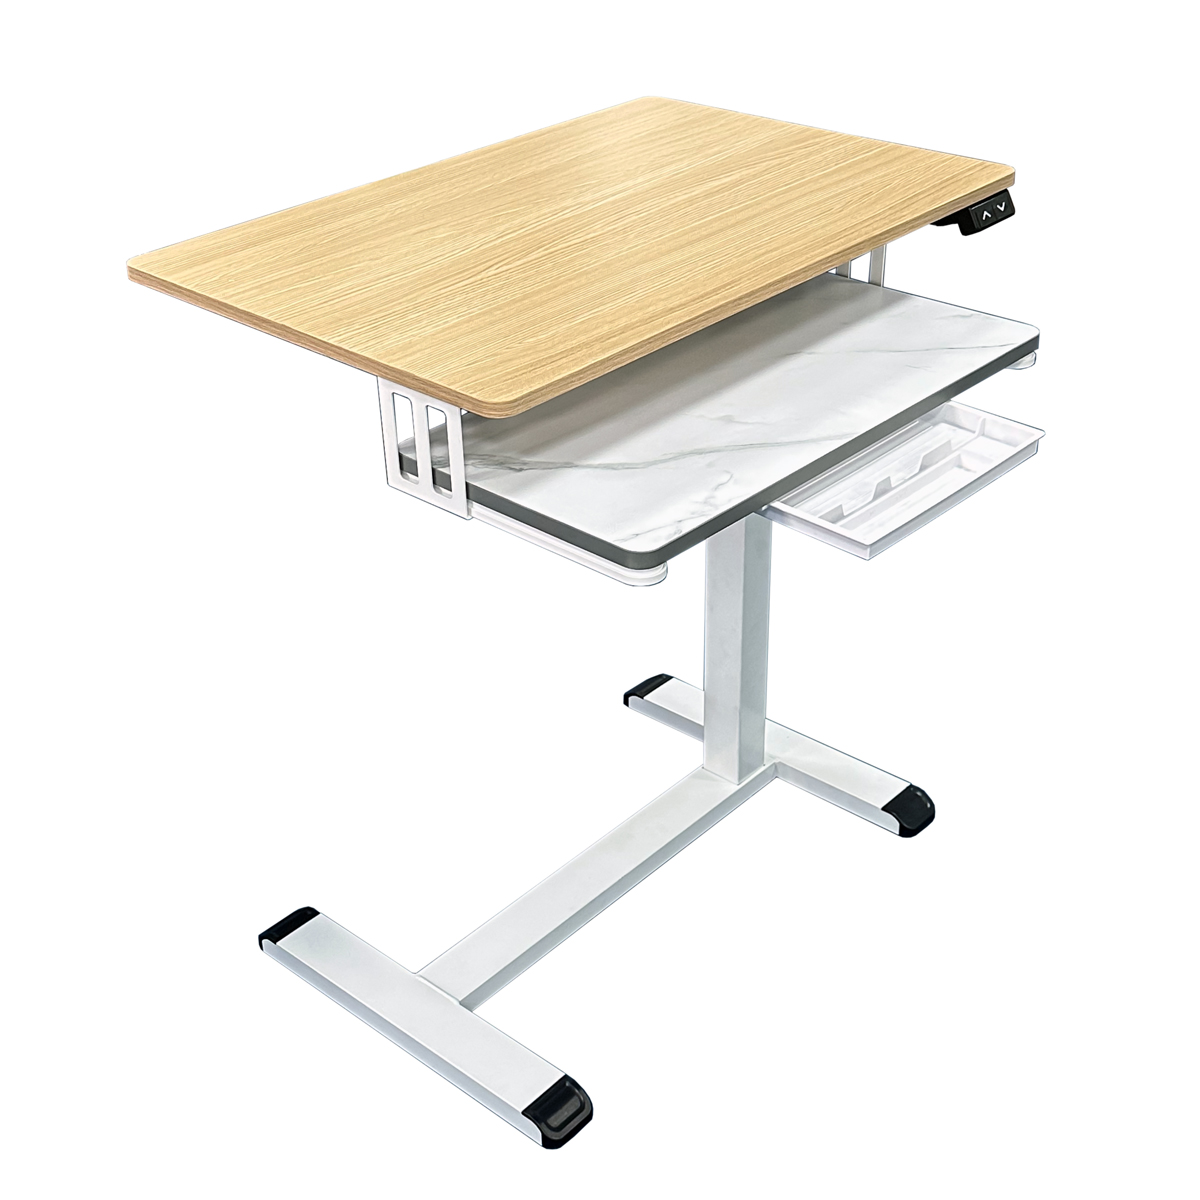 RXL-5 Movable Keyboard Holder Height Adjustable Bedside Table